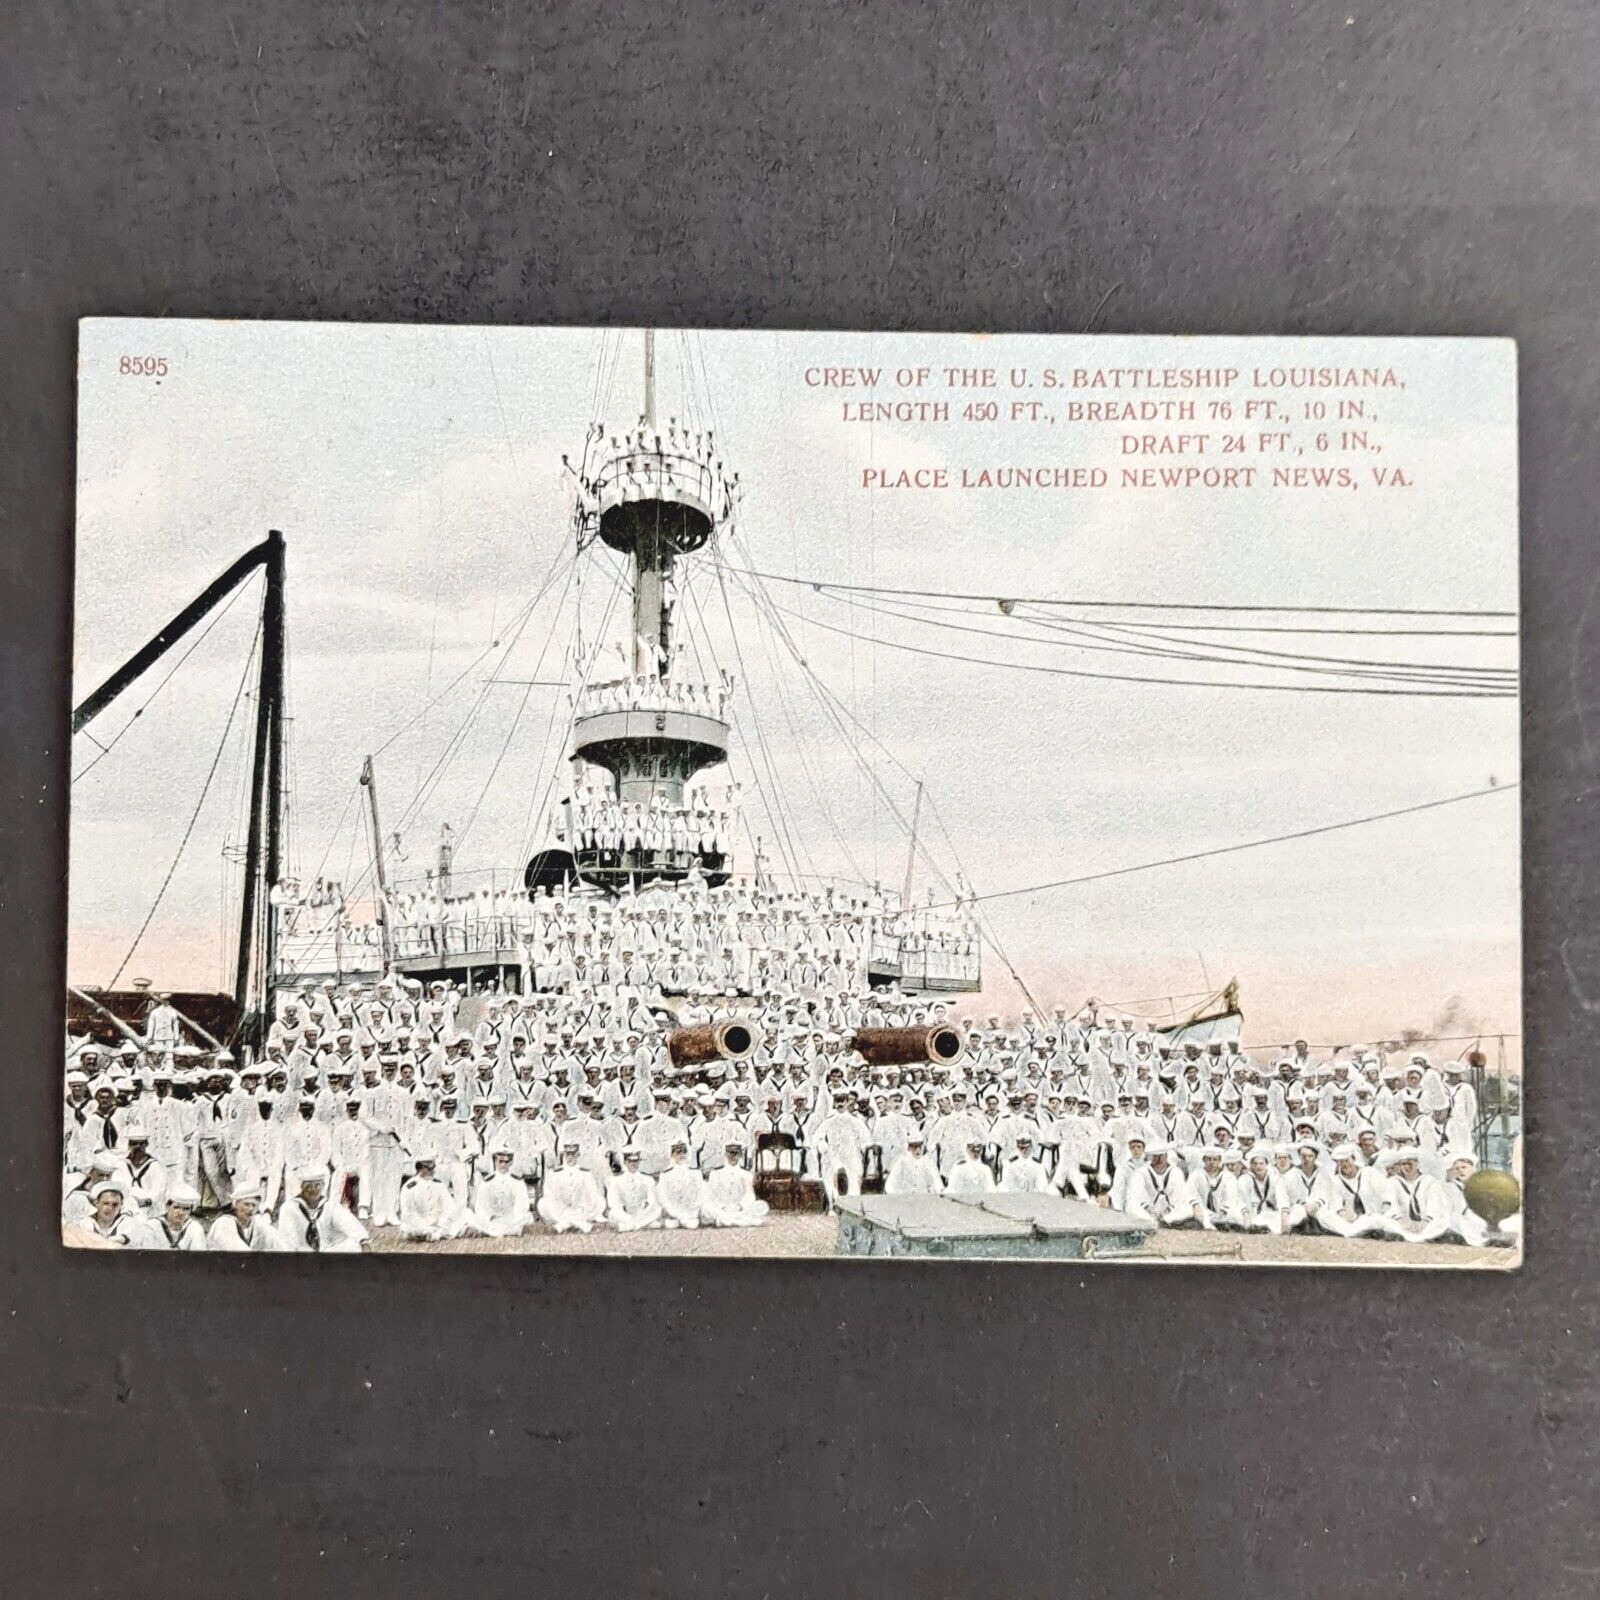 ANTIQUE 1908 POST CARD CREW OF THE U.S. BATTLESHIP LOUSIANNA IN NEWPORT NEWS, VA